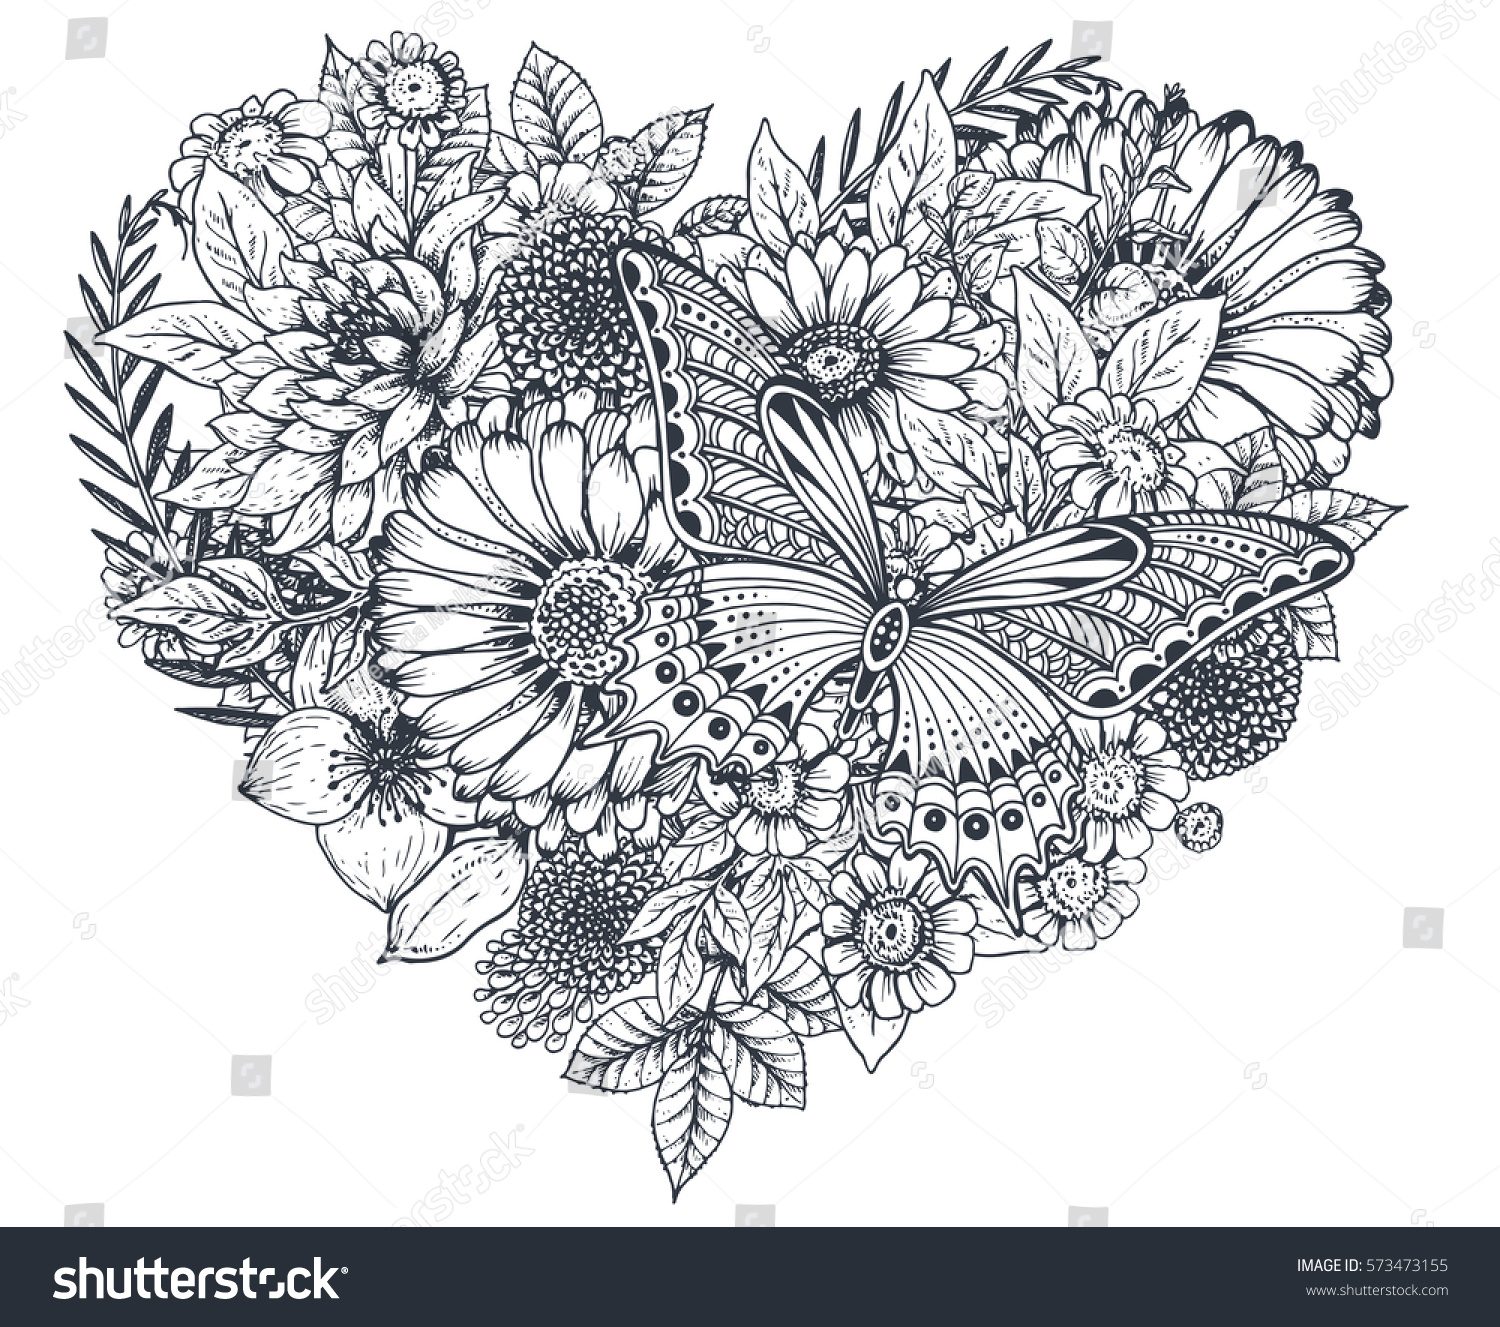 Floral Heart Bouquet Composition Hand Drawn Stock Vector 573473155 - Shutterstock